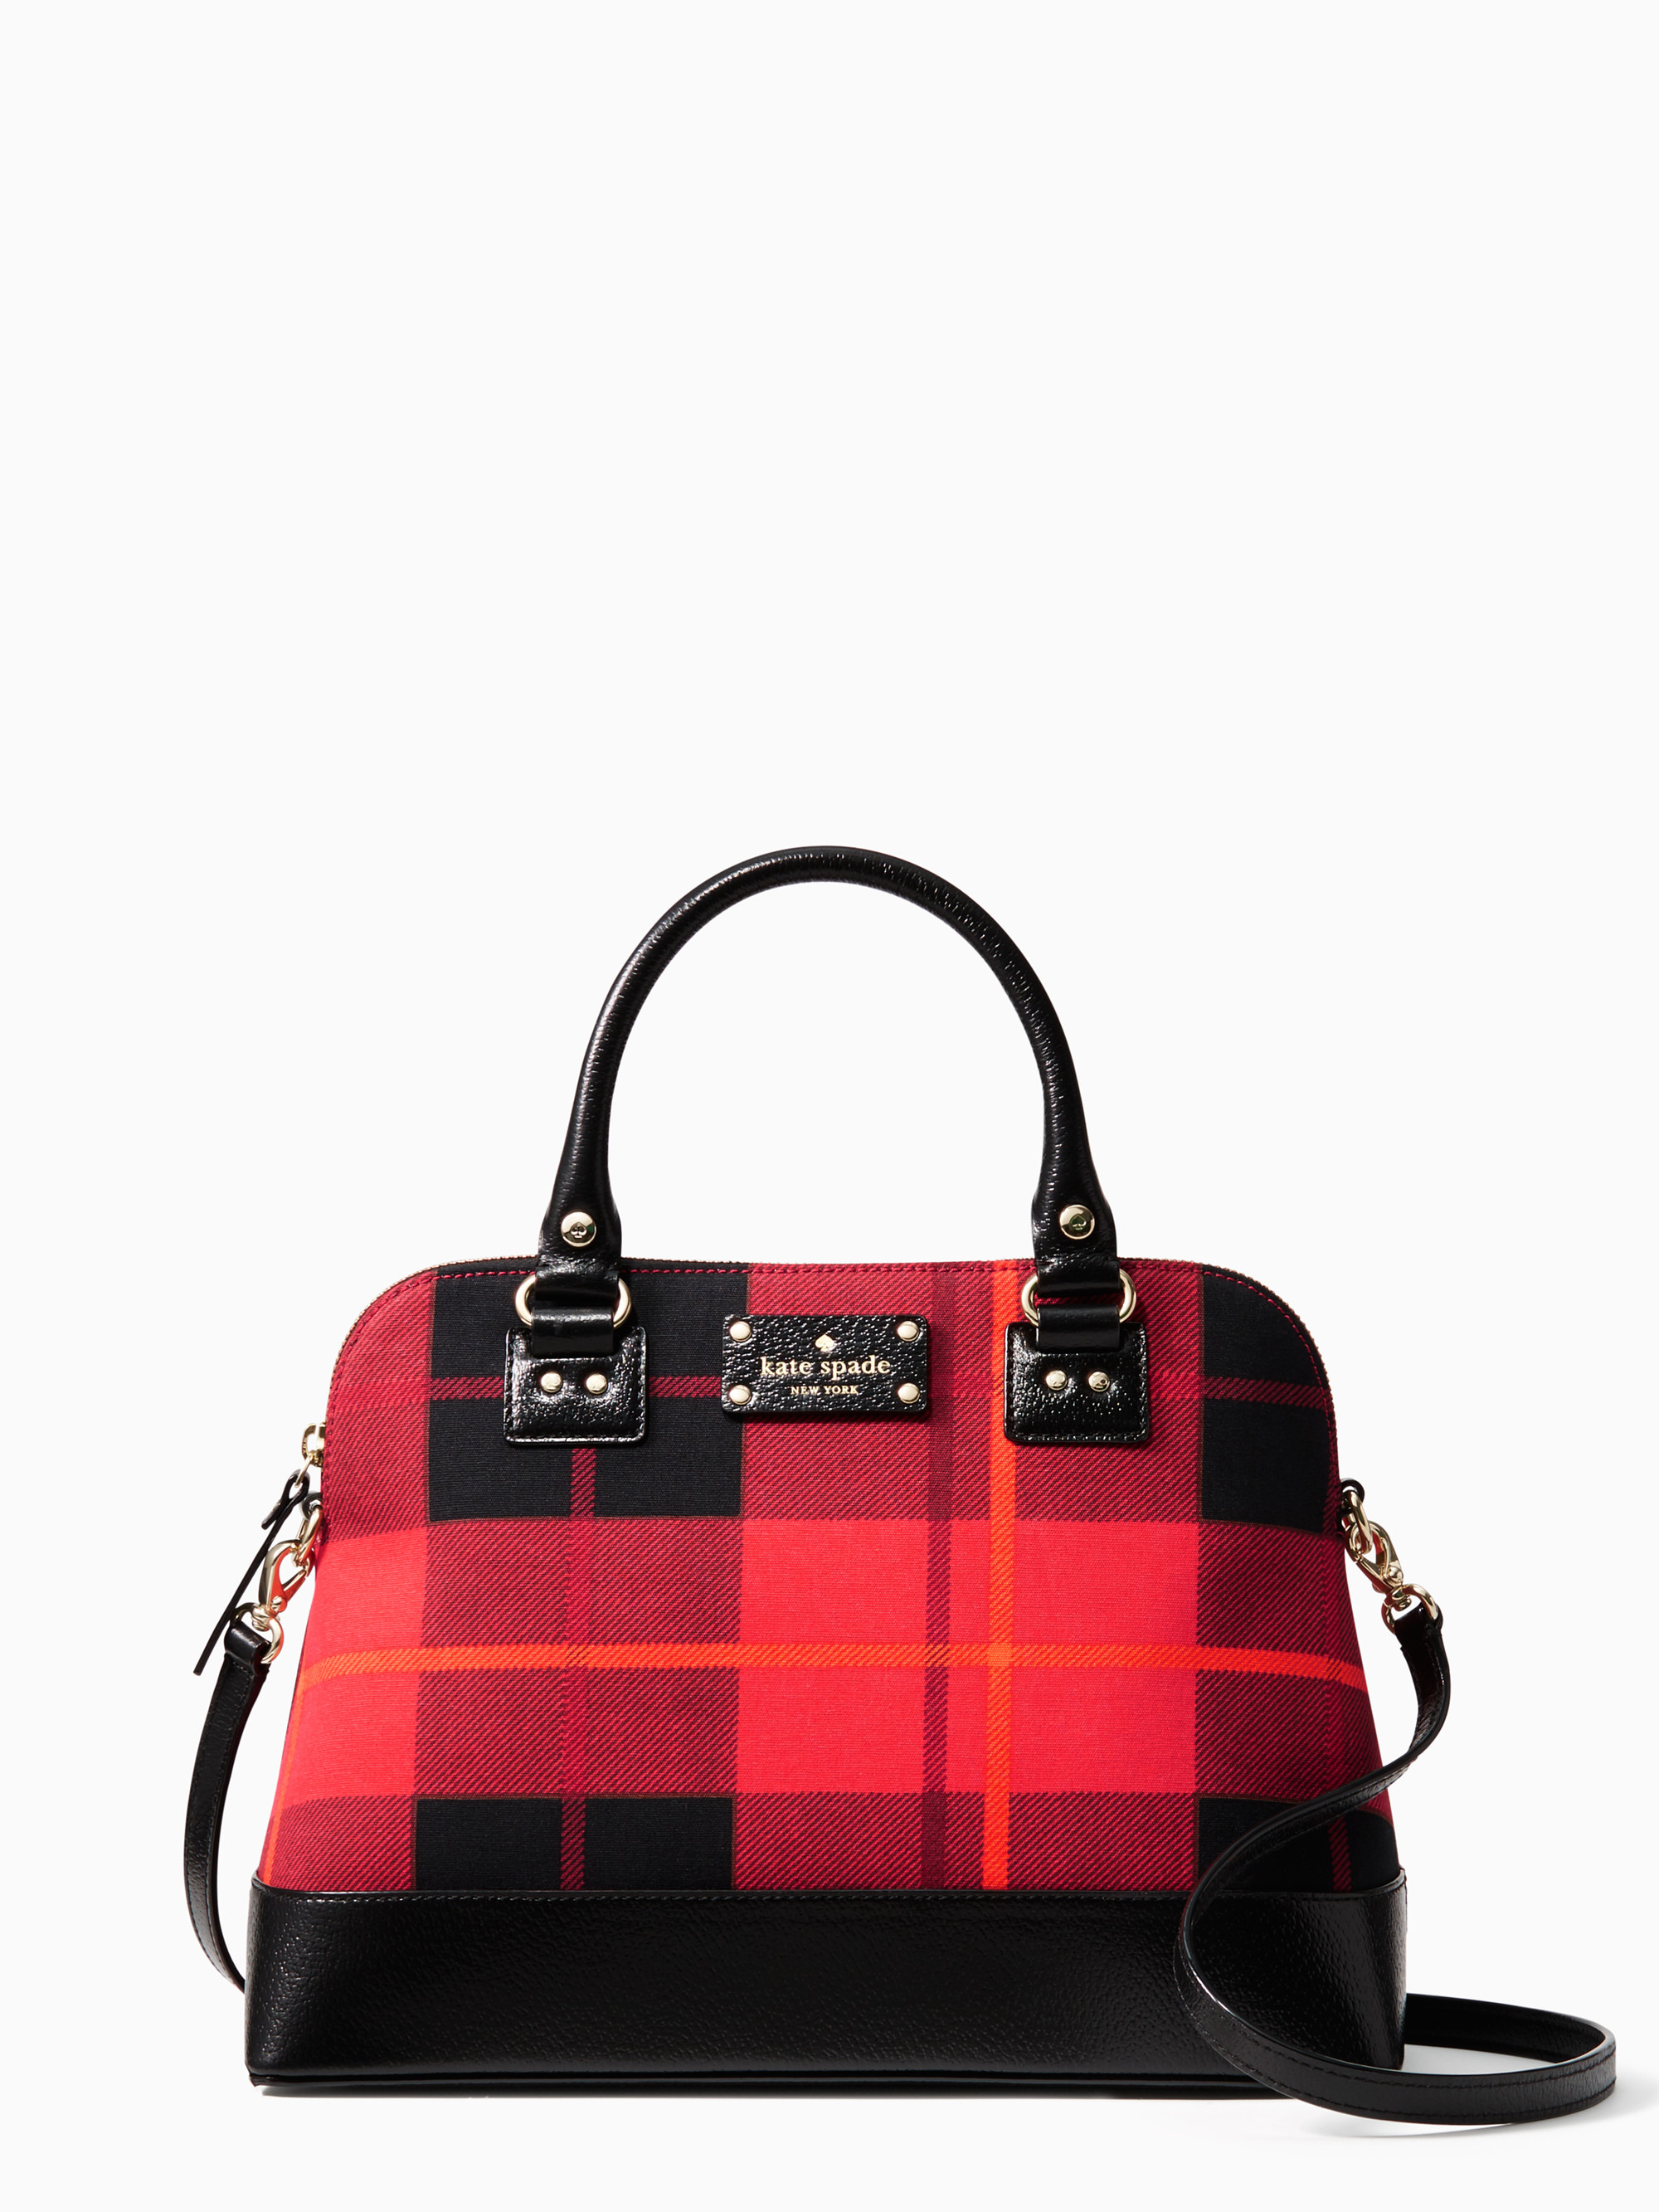 Handbag Designer By Kate Spade Size: Medium